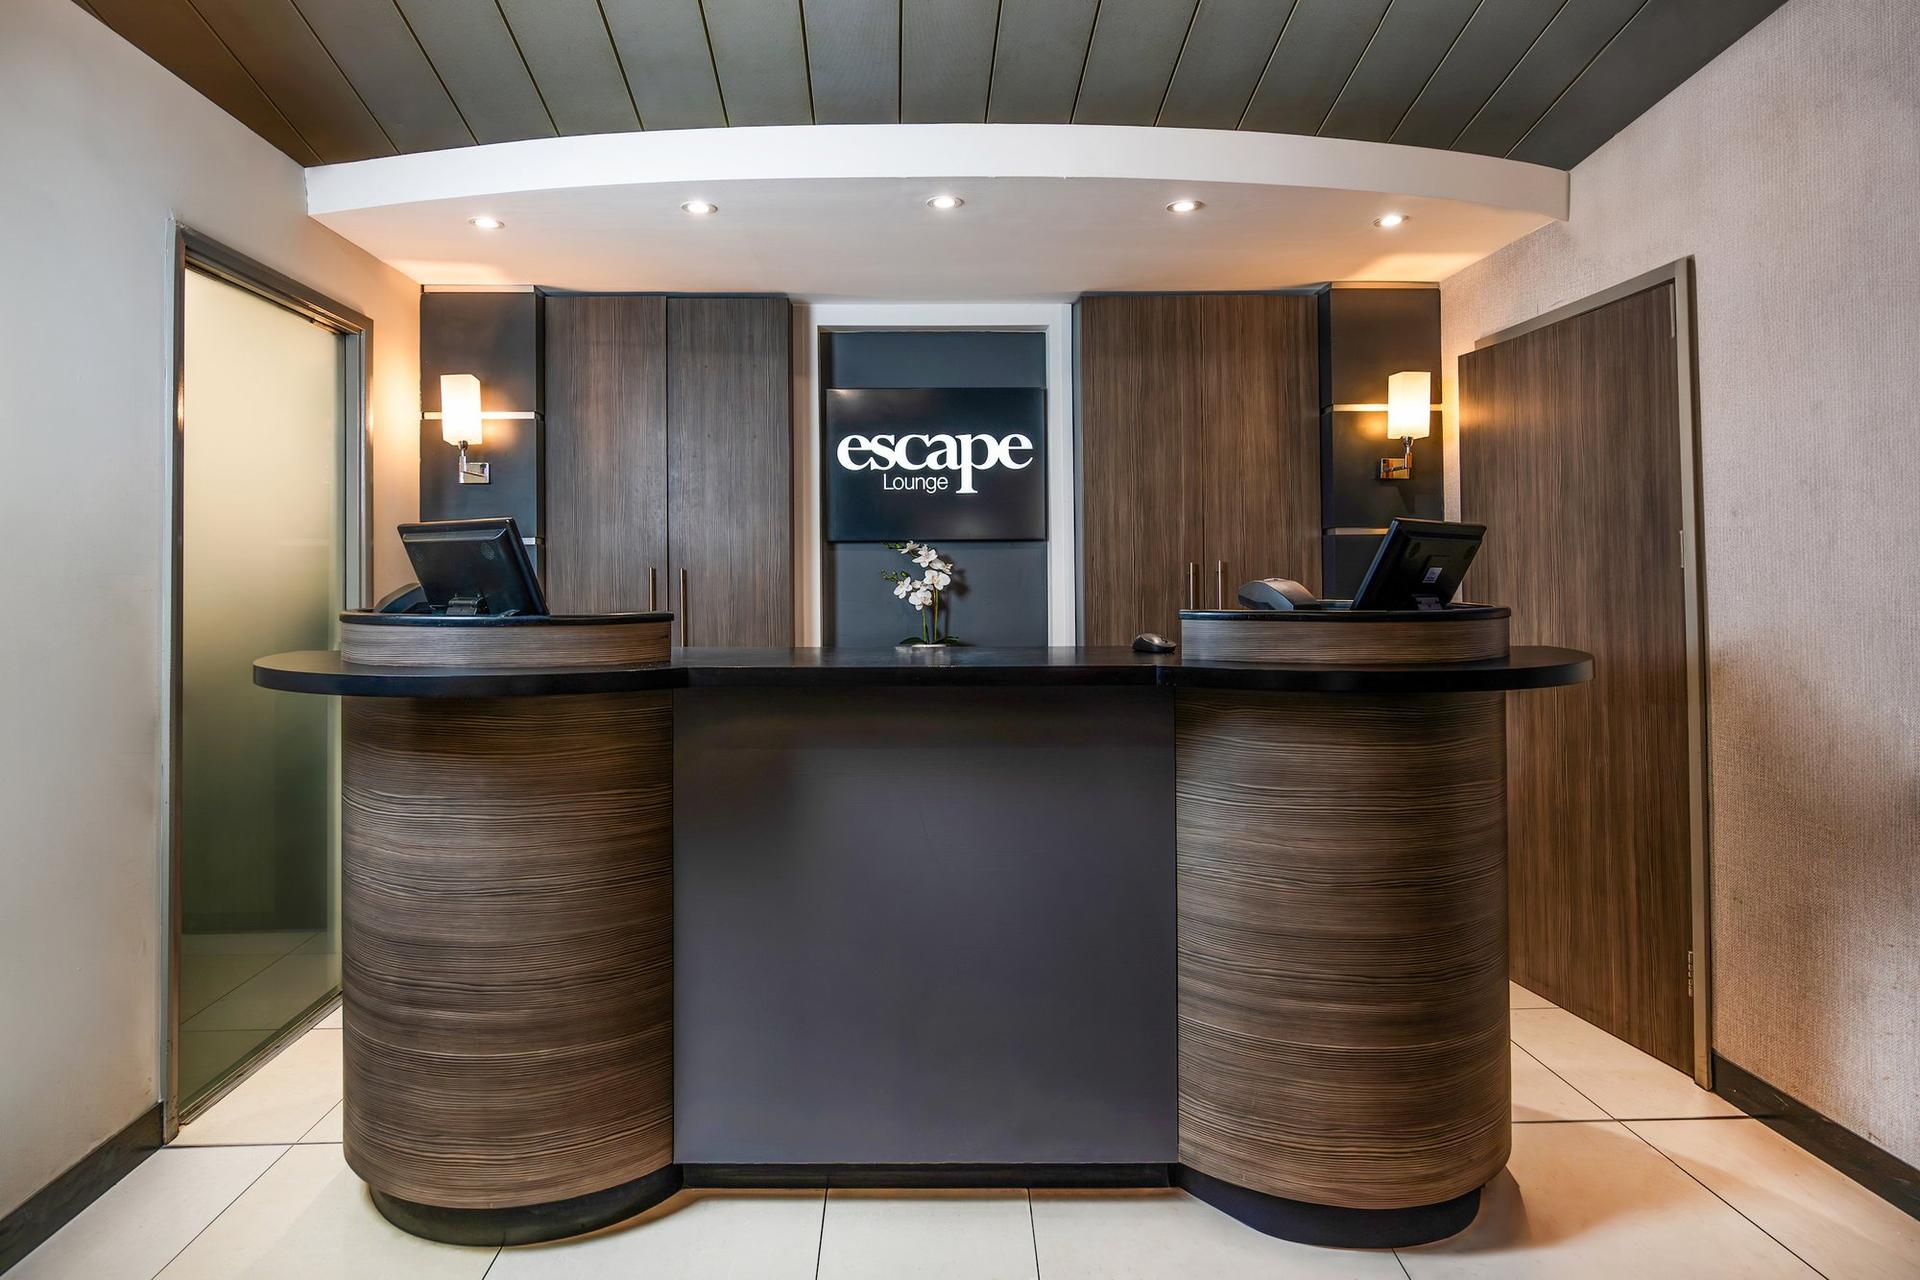 Escape Lounges image 5 of 10